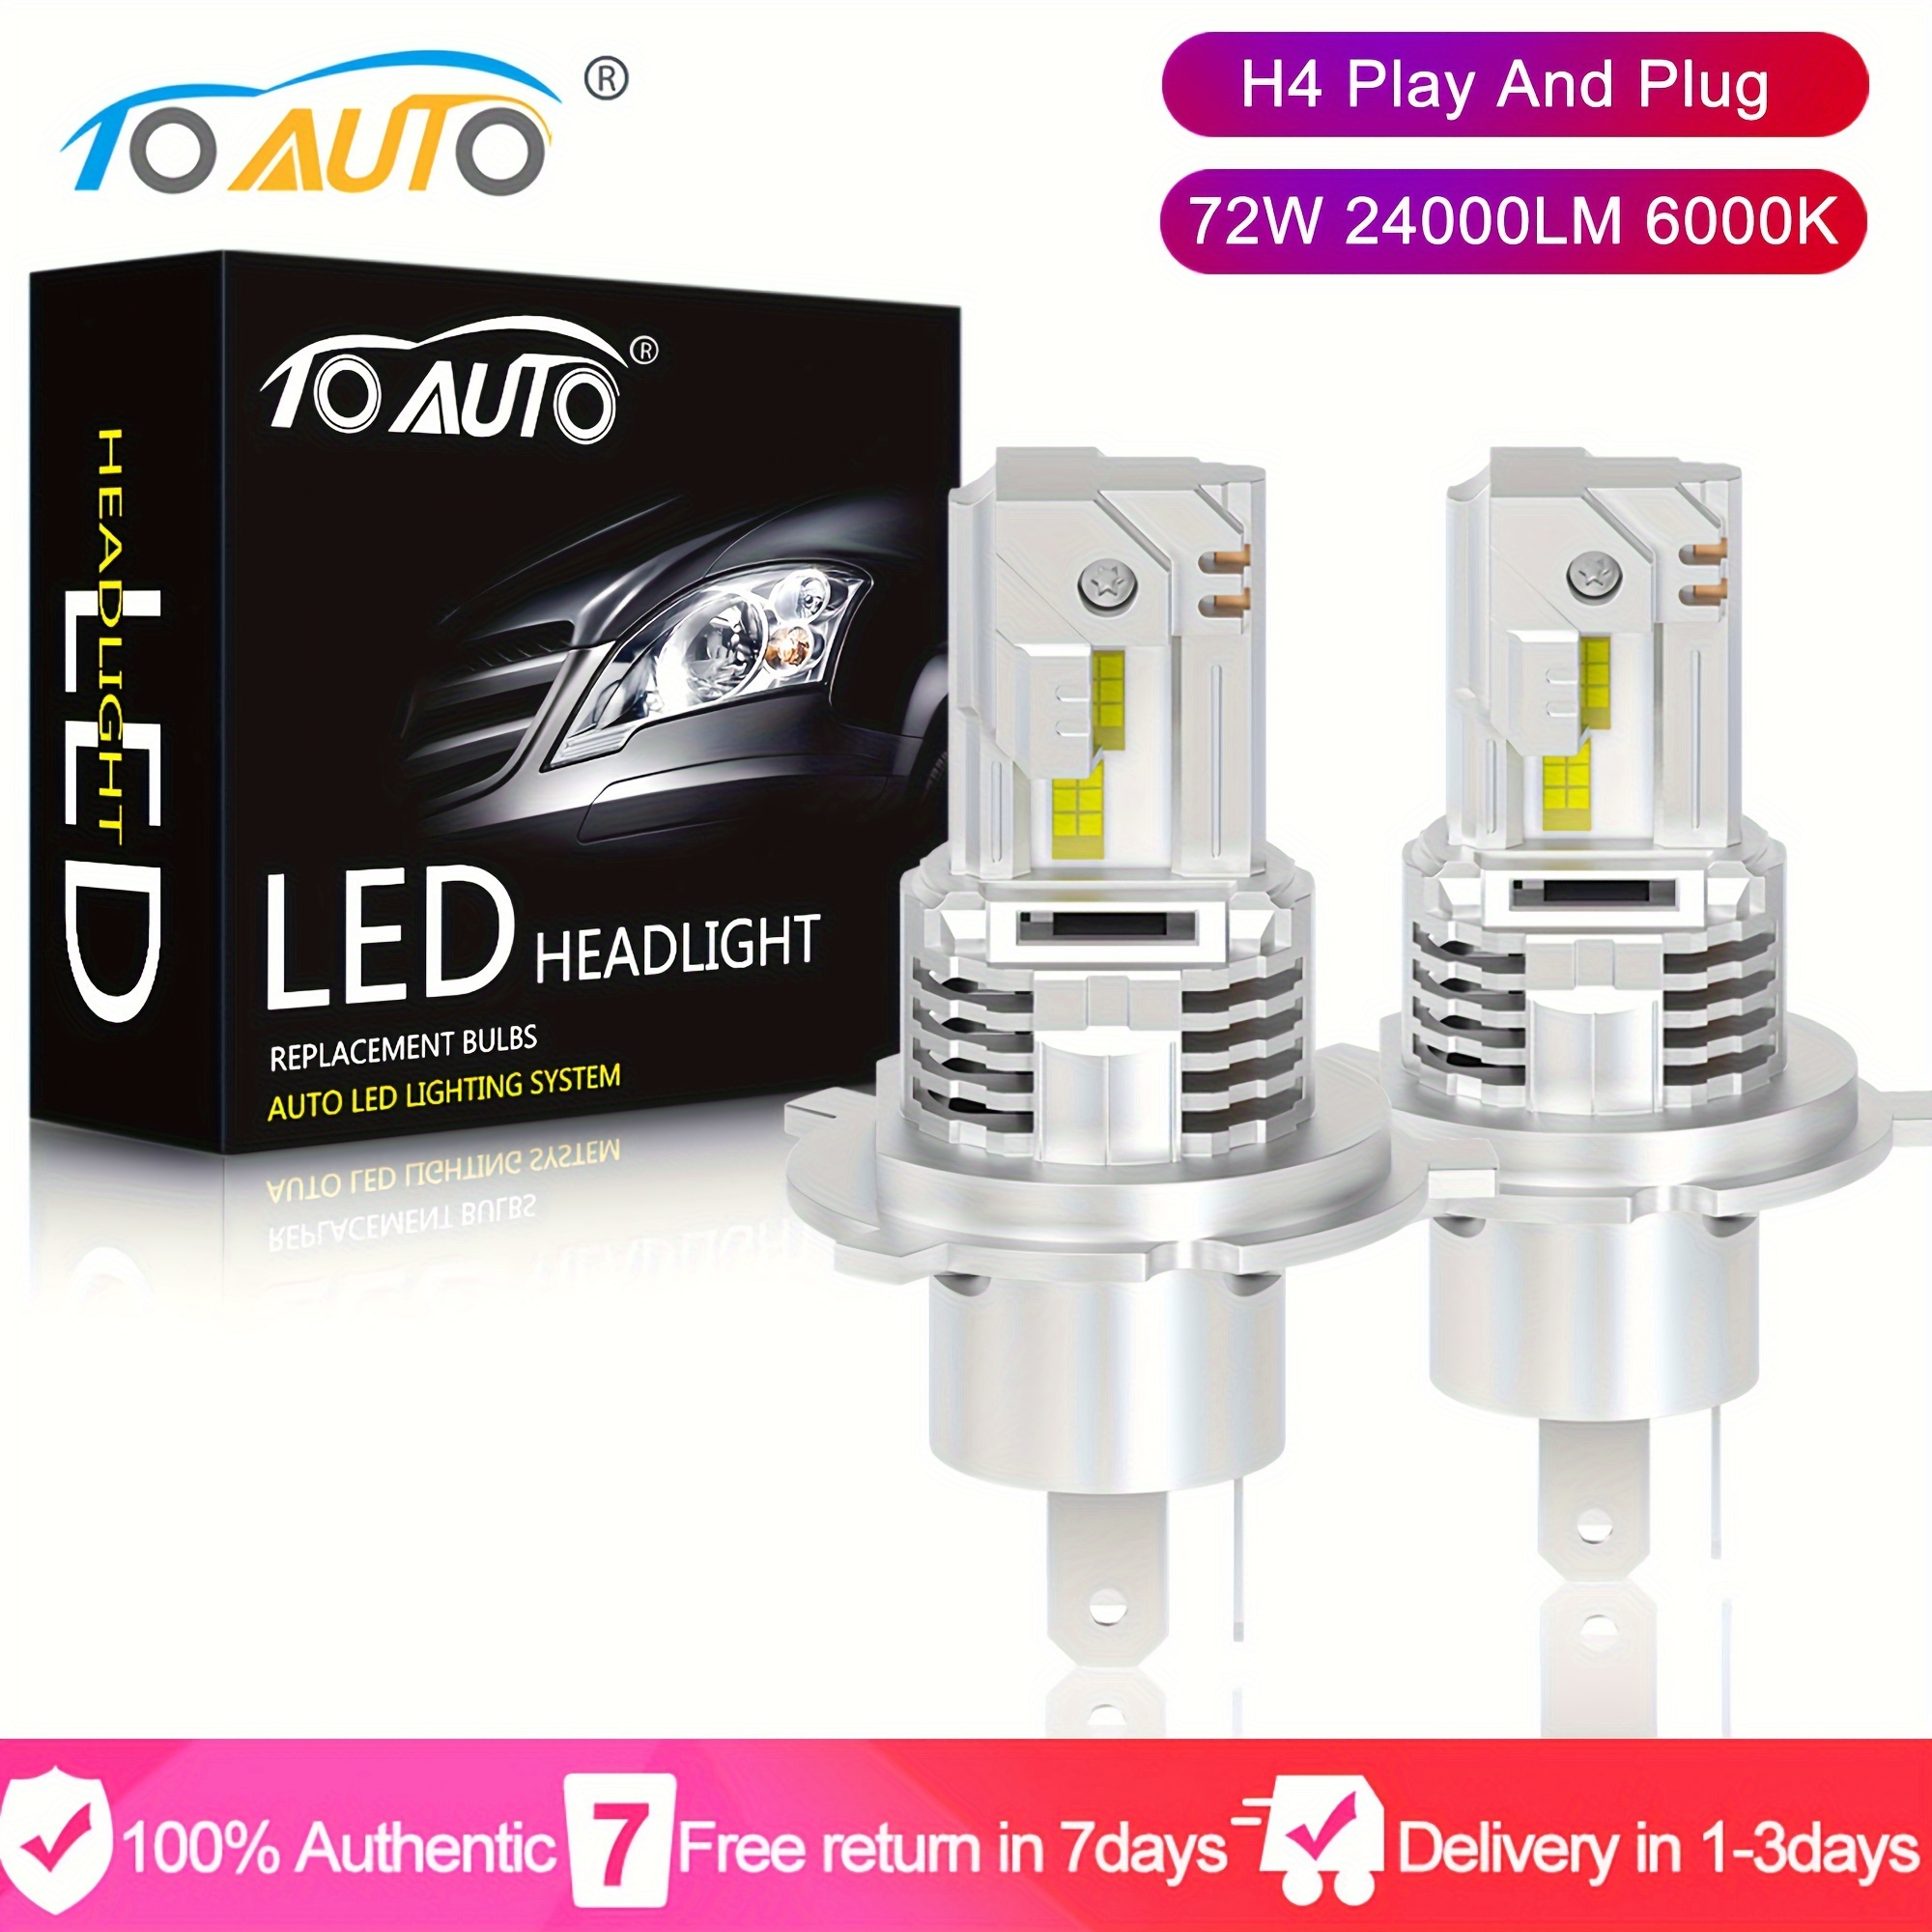 Bombilla LED para faros delanteros, 120 W, Canbus 22000 LM, bombilla LED  Turbo para automóvil, 6500 K, paquete de 2, H4